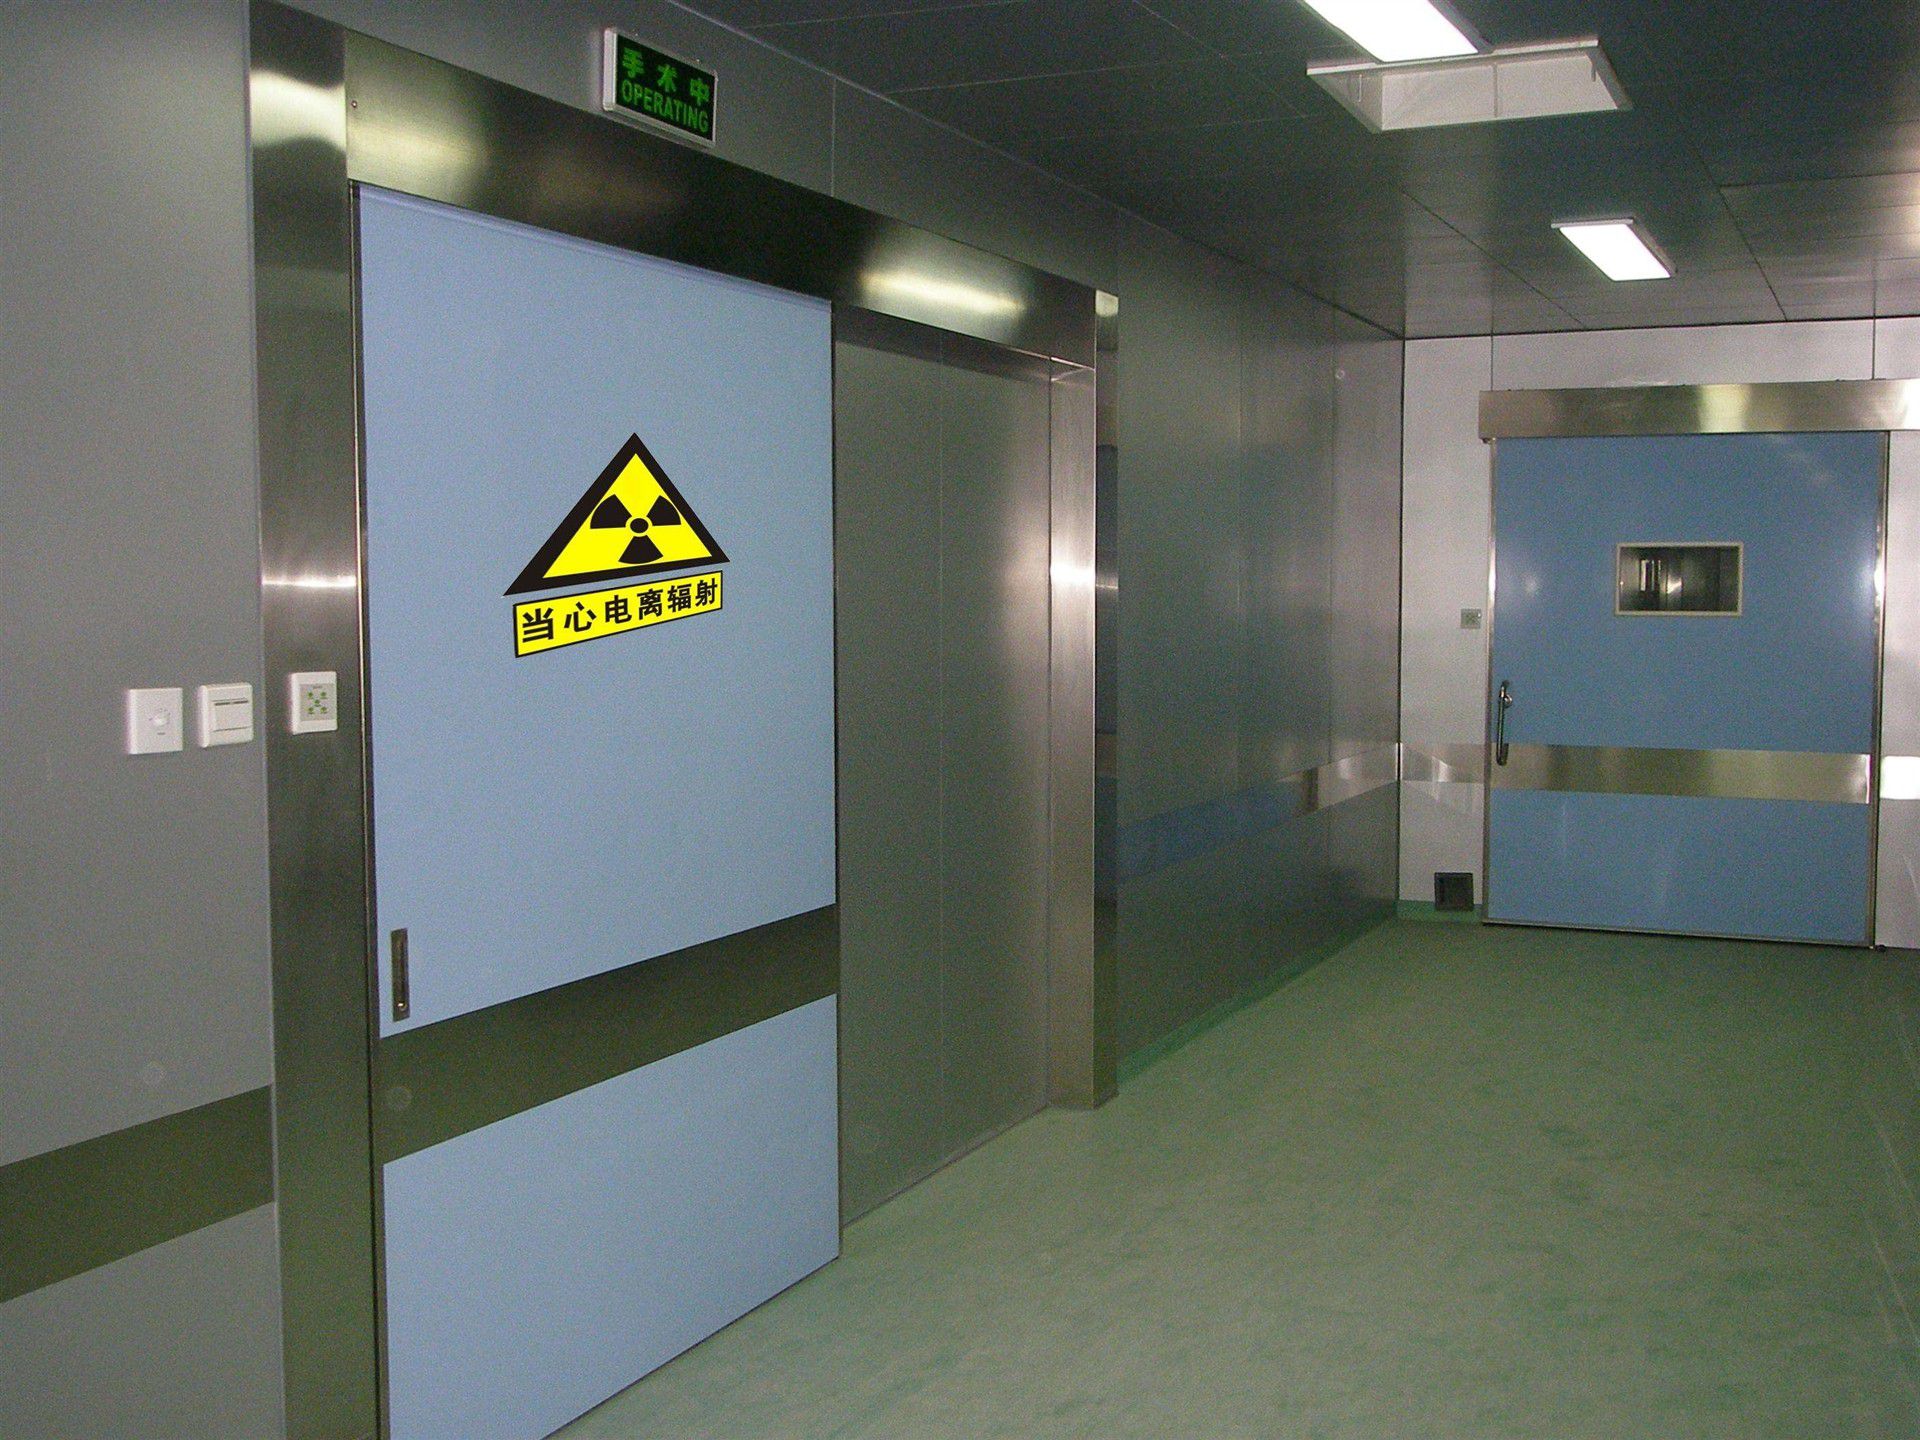 CT室铅门,铅箱,3mm铅板,CT室铅板,放射科铅板,铅板厂家-贵港CT室铅板公司